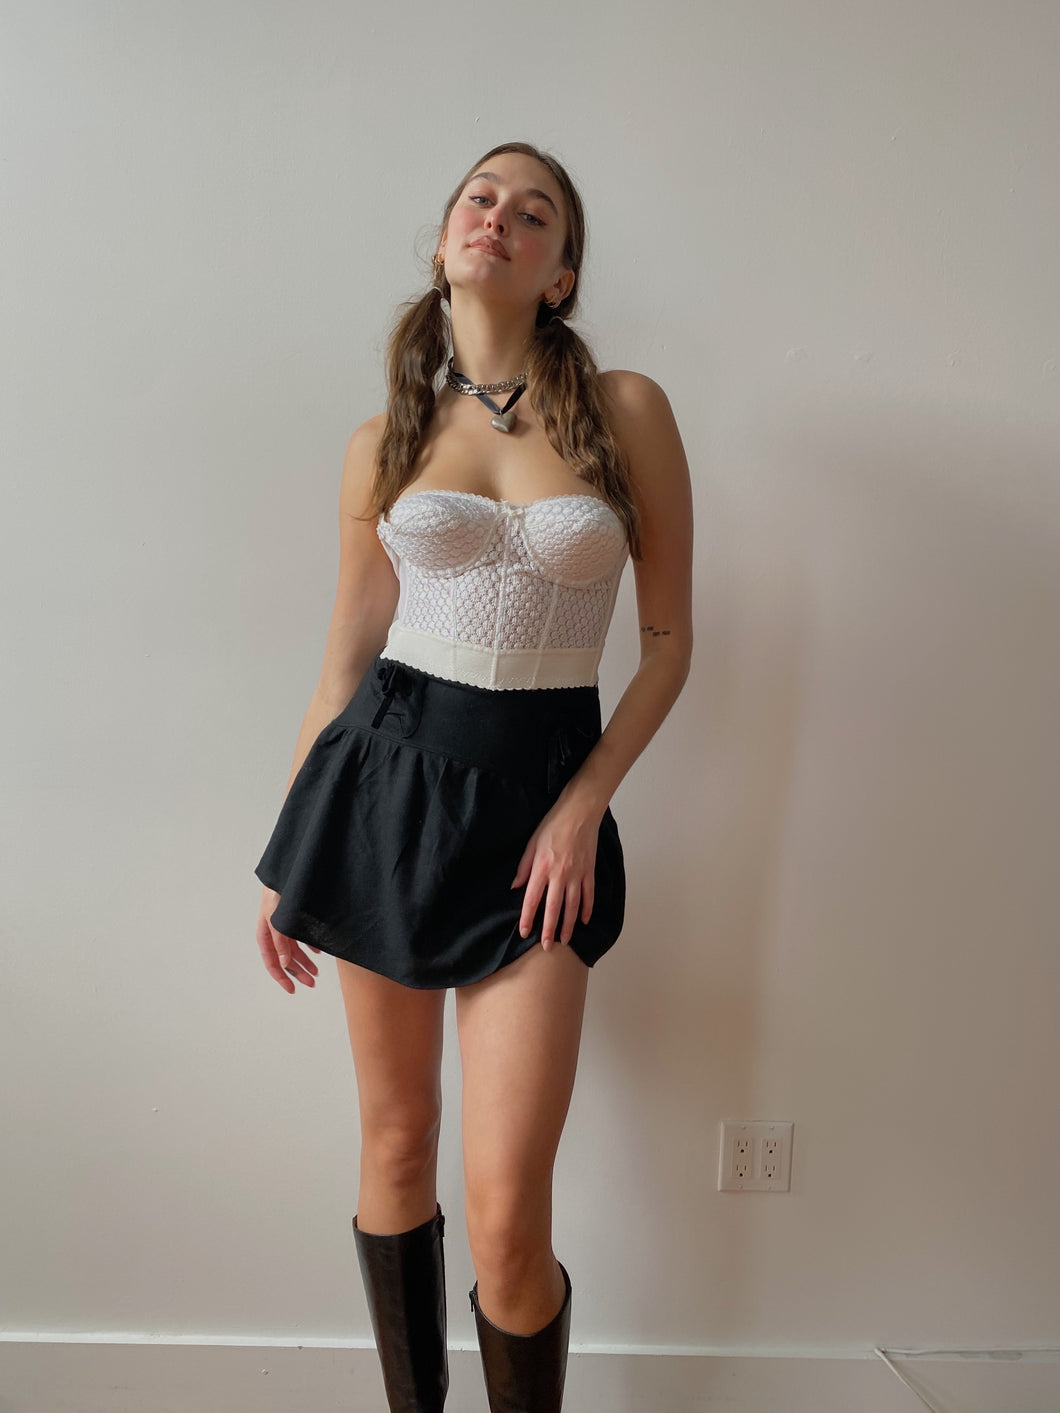 00s Blair mini skirt